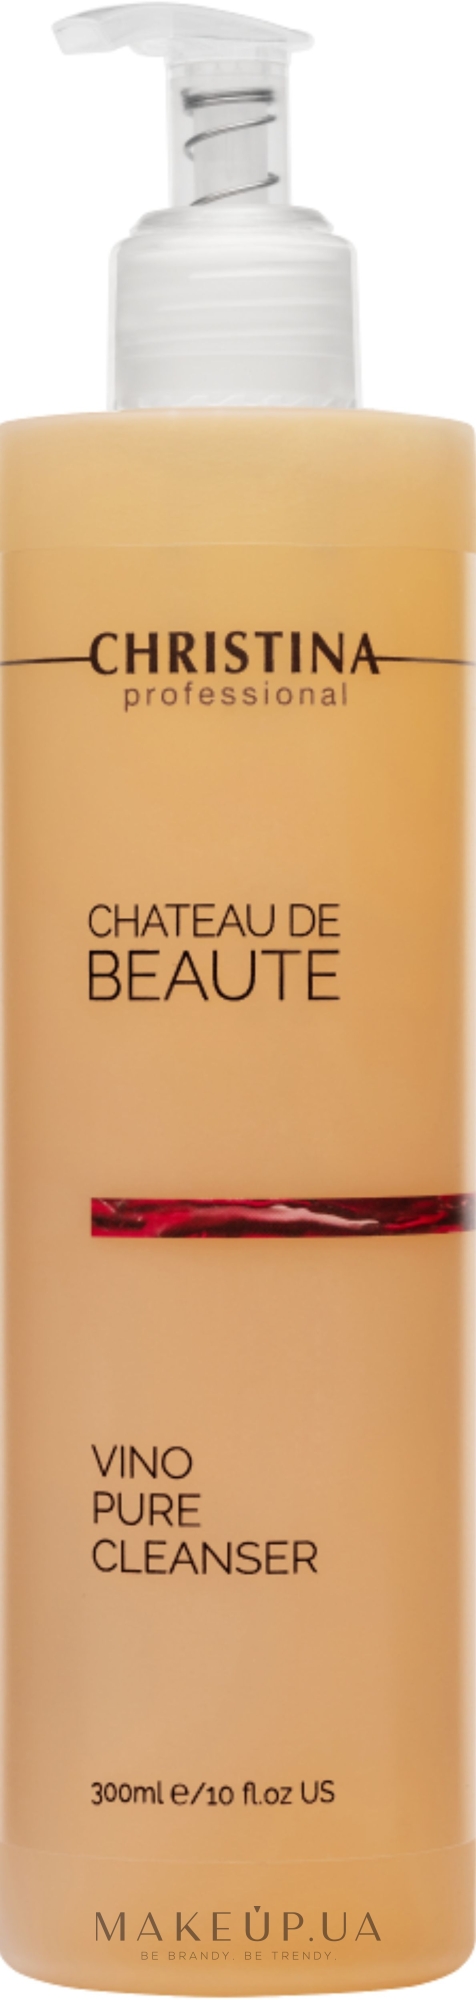 Очищающий гель с виноградом - Christina Chateau de Beaute Vino Pure Cleanser — фото 300ml